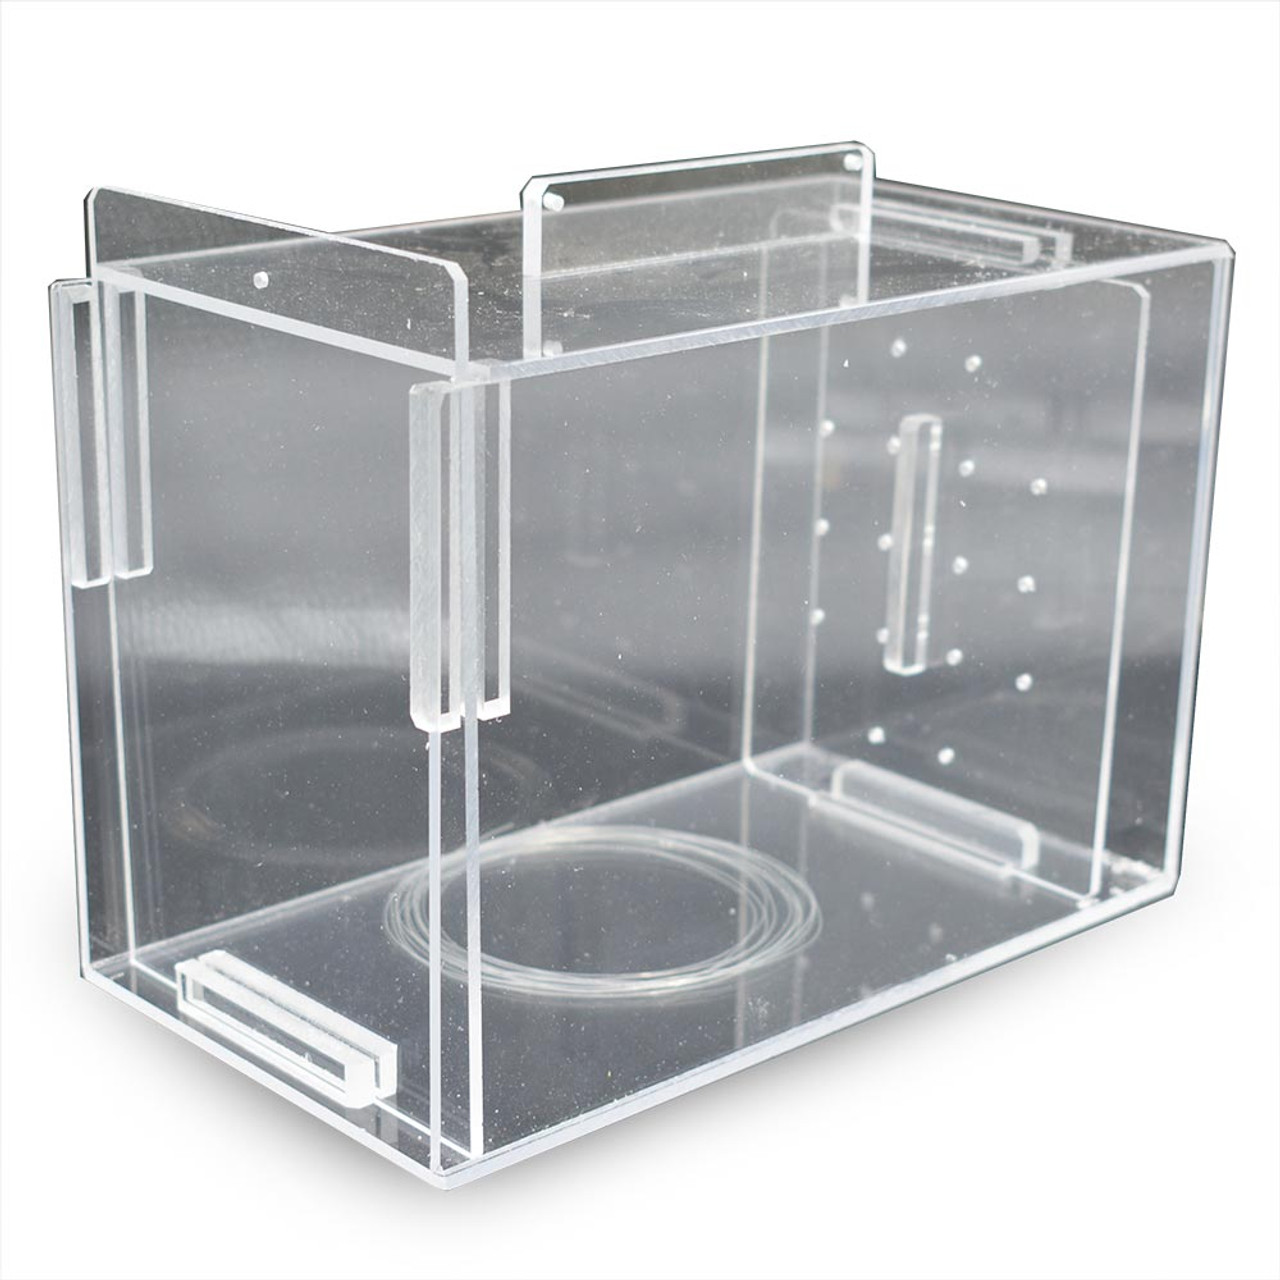 SaltwaterAquarium Large Acrylic Fish & Pest Trap 9 x 5 x 6 for Aquarium  | Acclimation Isolation Box Fish Tank Breeding Box